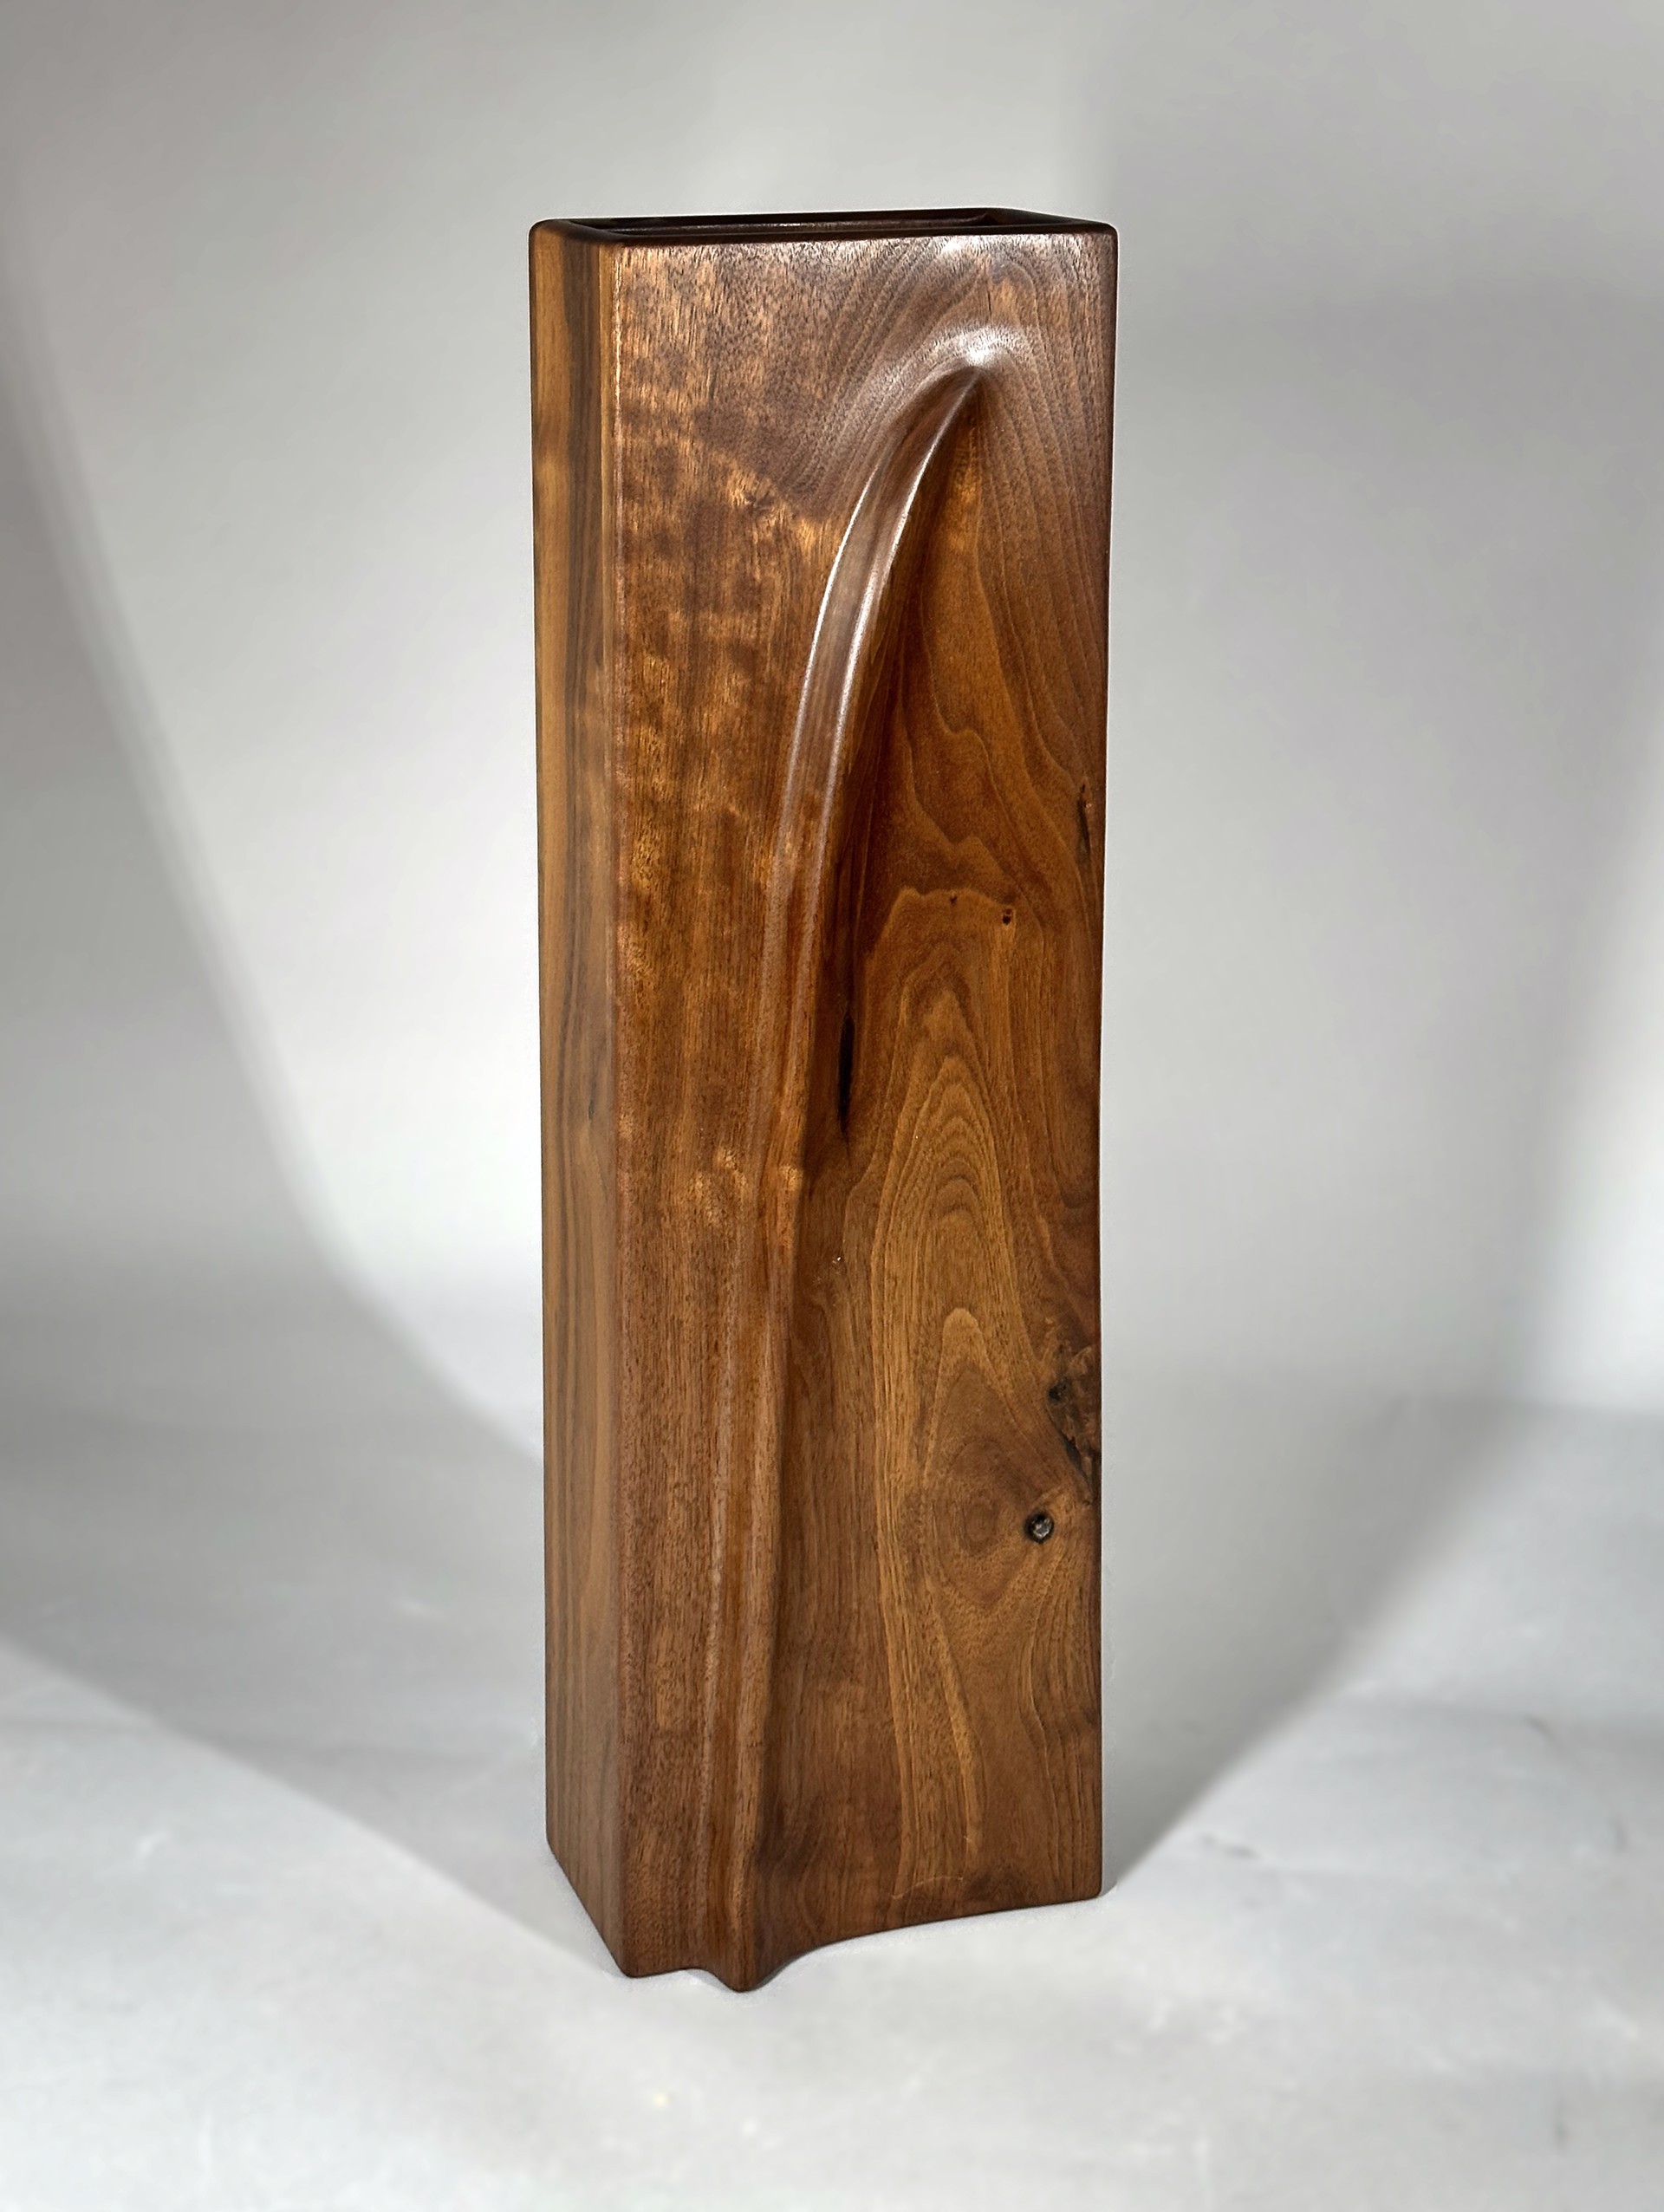 Carved Vase by David Henryson